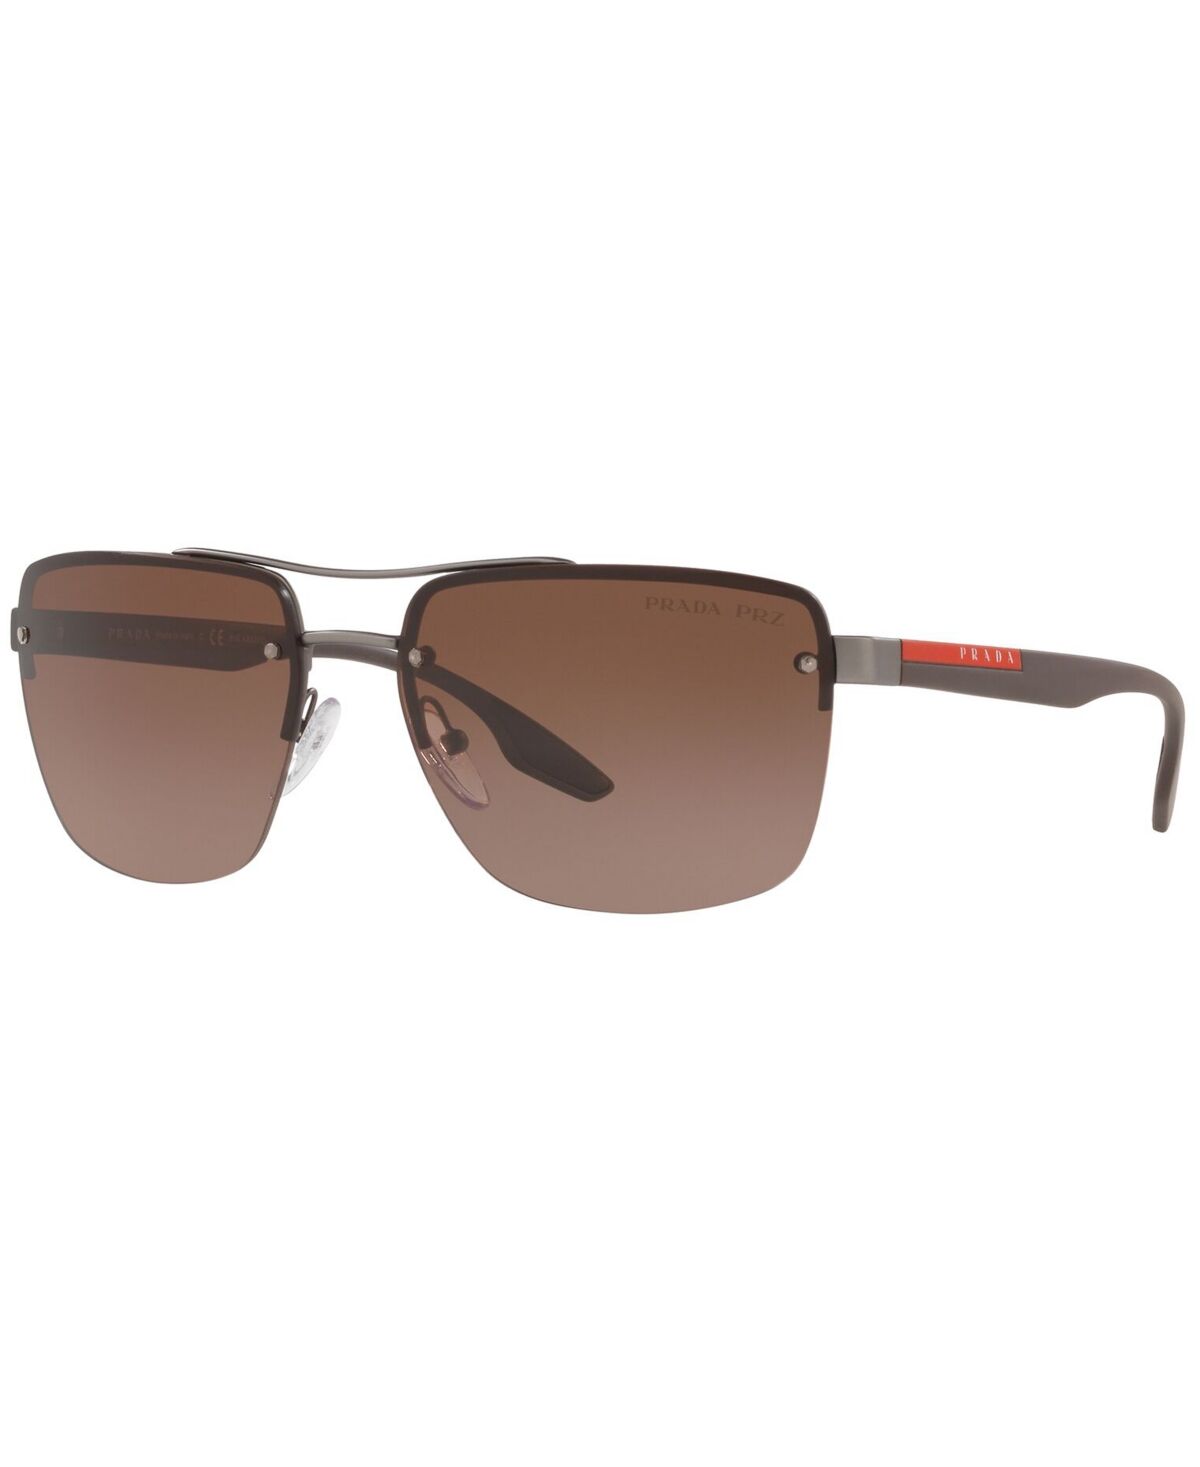 Prada Linea Rossa Men's Polarized Sunglasses, Ps 60US 62 Lifestyle - GUNMEAL RUBBER/POLAR BROWN GRADIENT